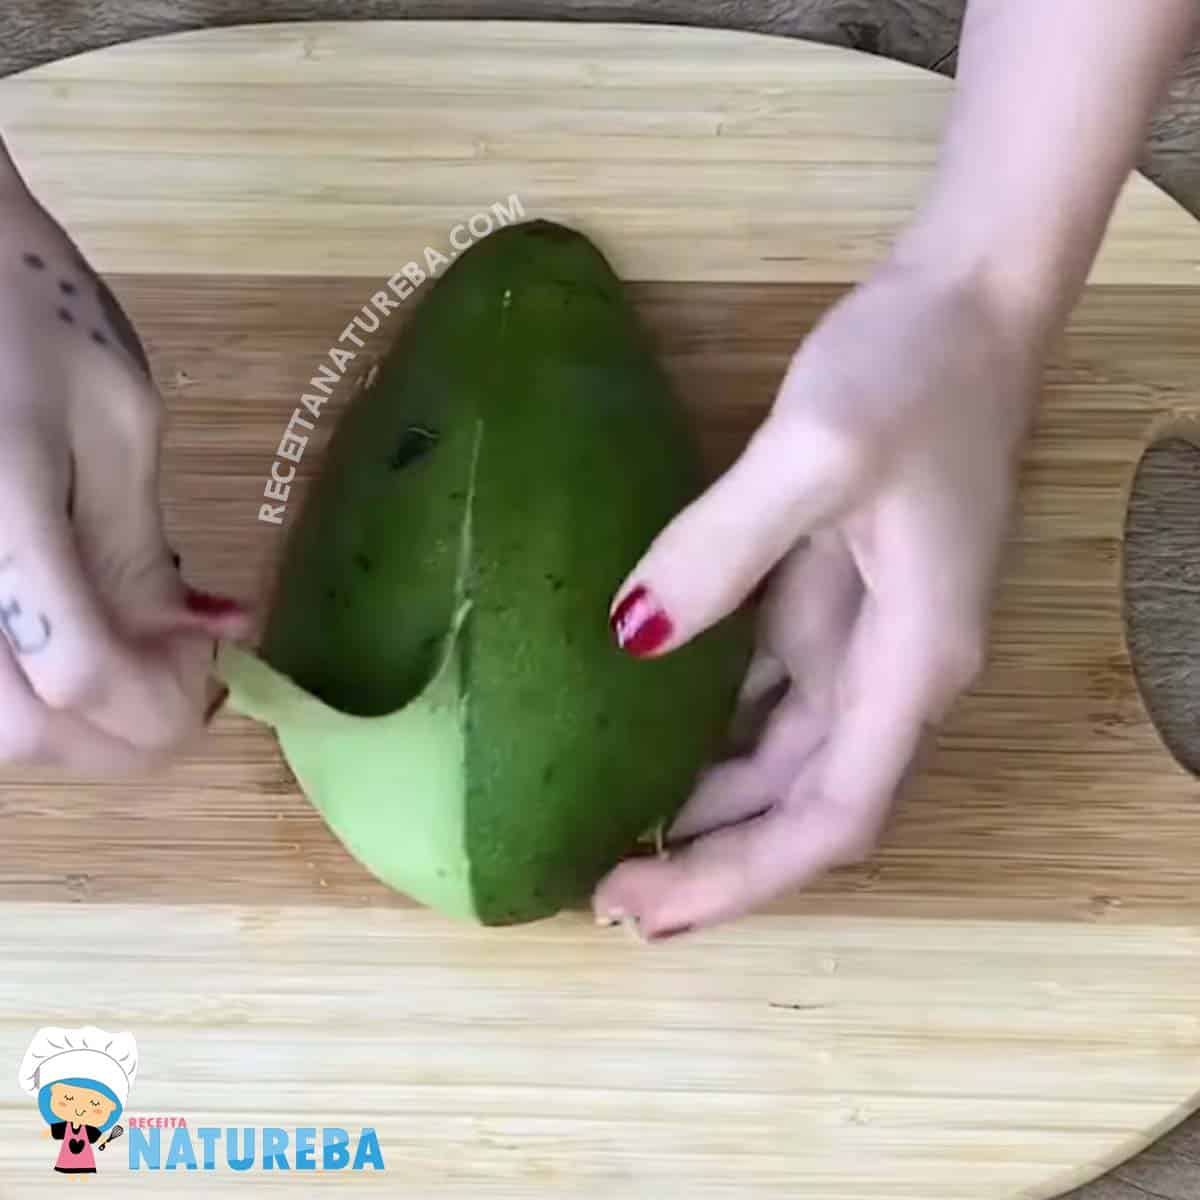 cortando o abacate